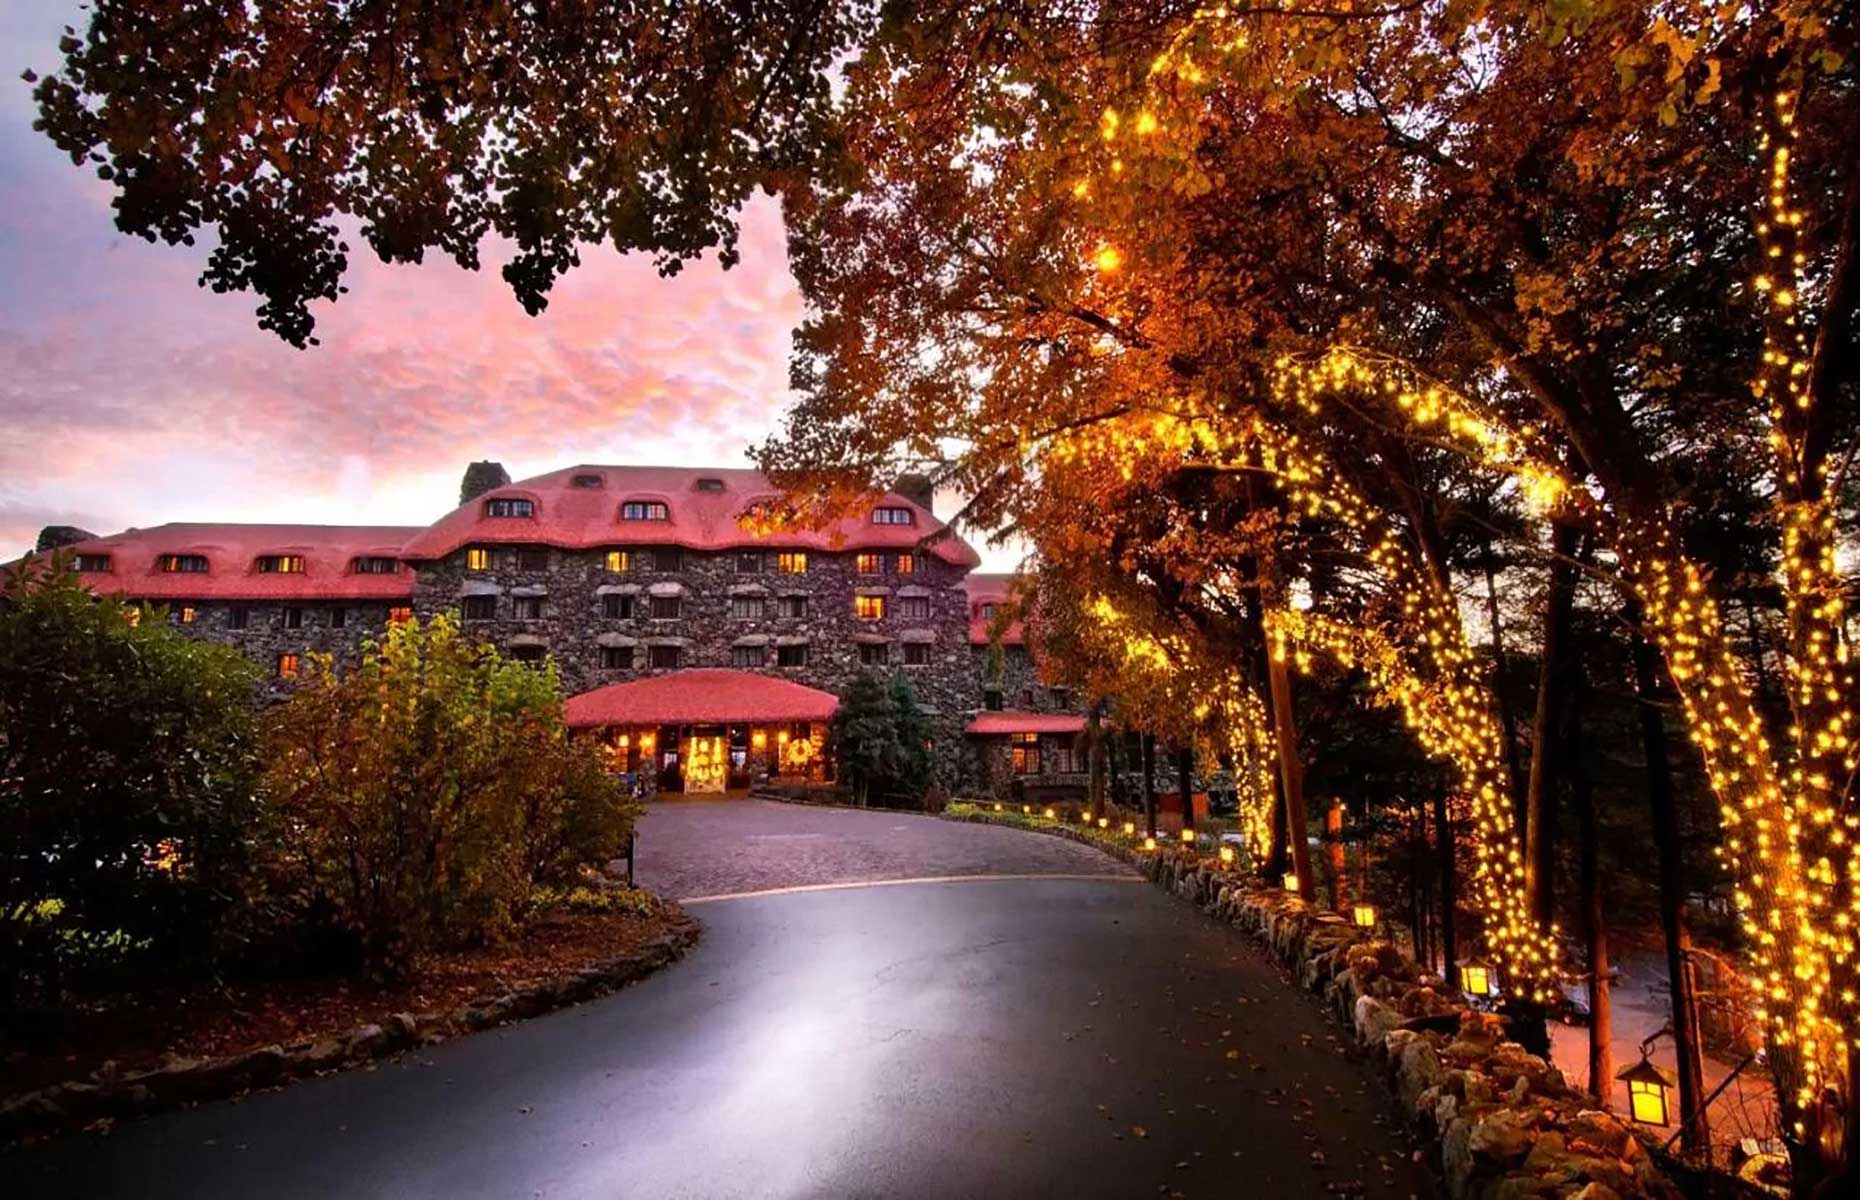 Omni Grove Park Inn (Image: The Omni Grove Park Inn – Asheville/booking.com)